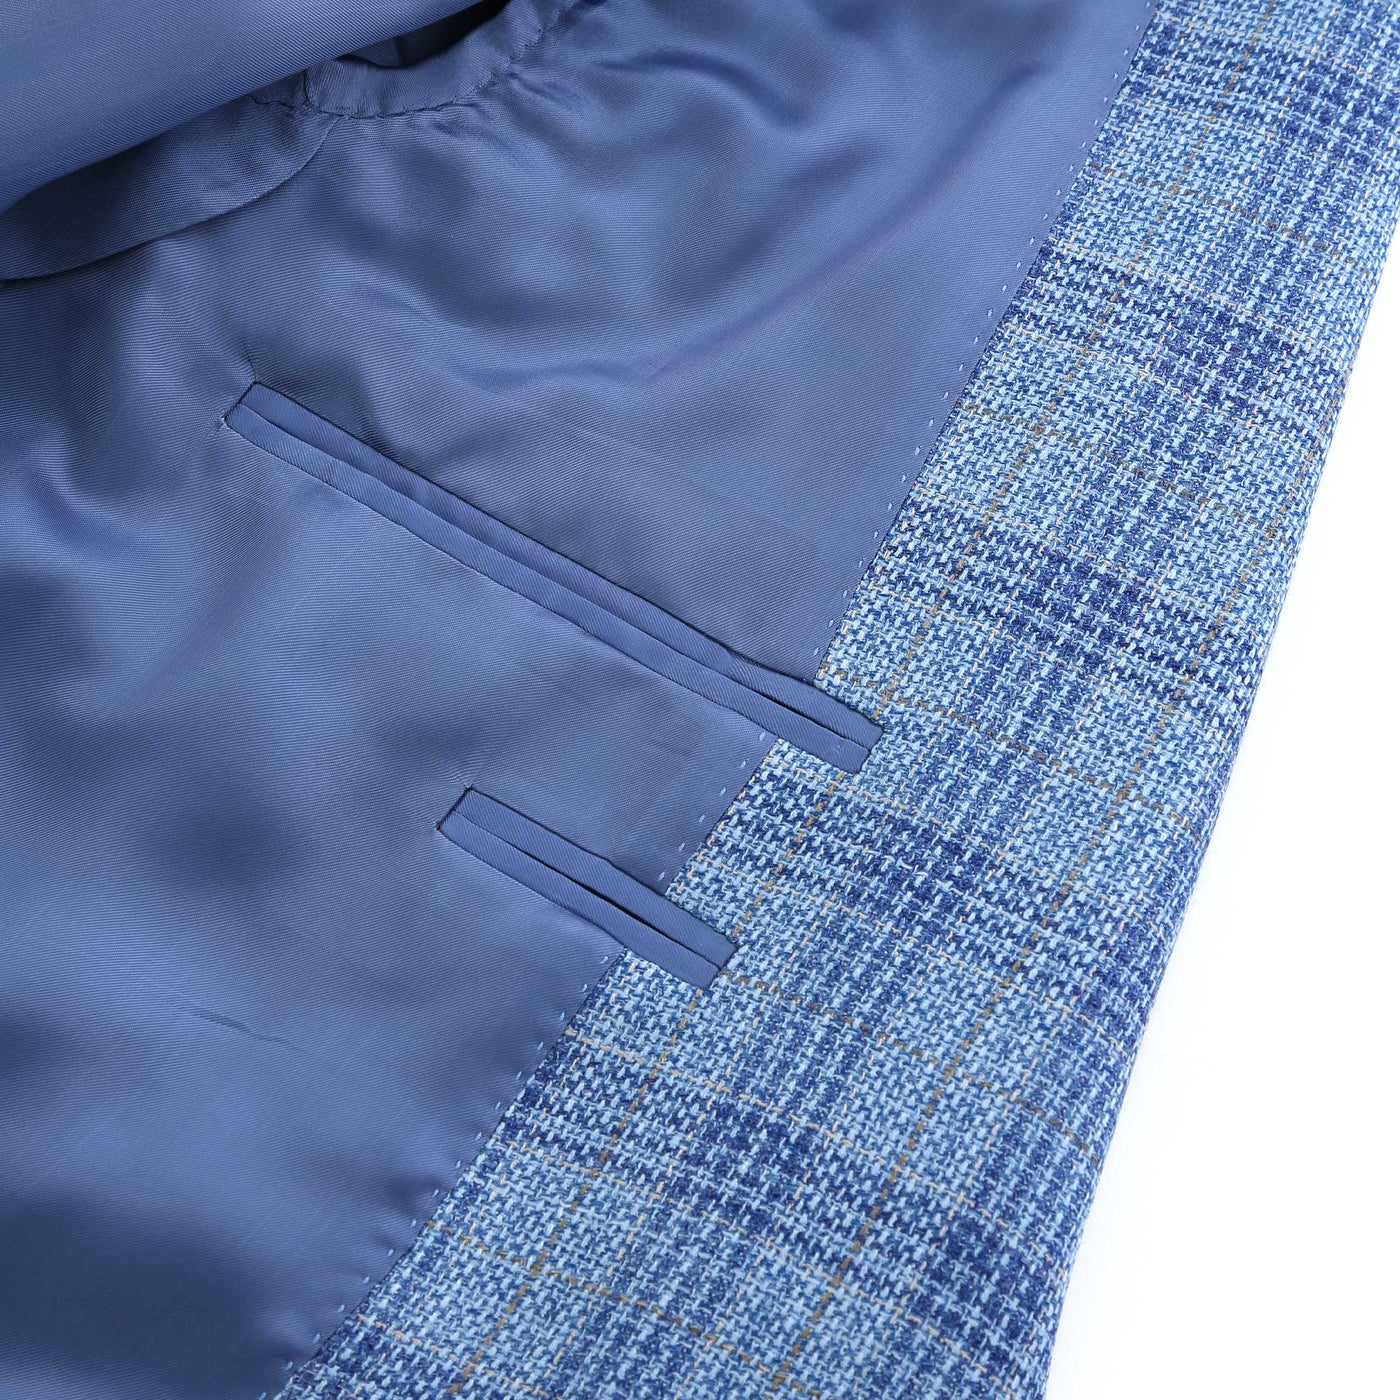 Canali Notch Lapel Milano Jacket in Sky Blue Check Inside Pocket